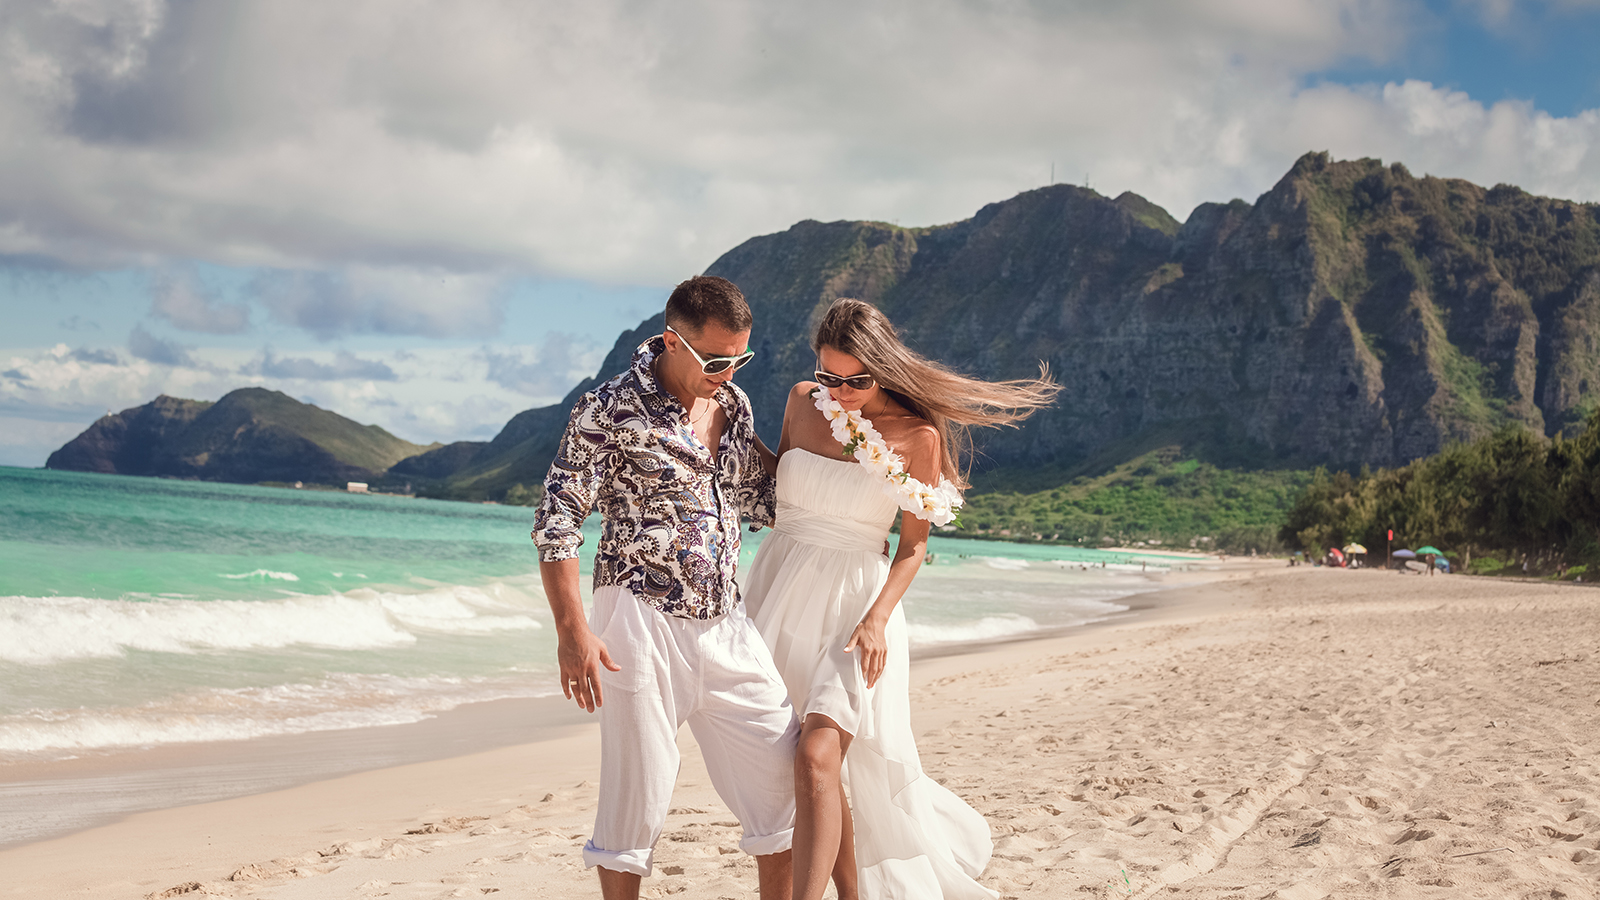 Beautiful Couple on beach vacation travel holiday in Hawaii. Oahu island, Hawaii USA destination.